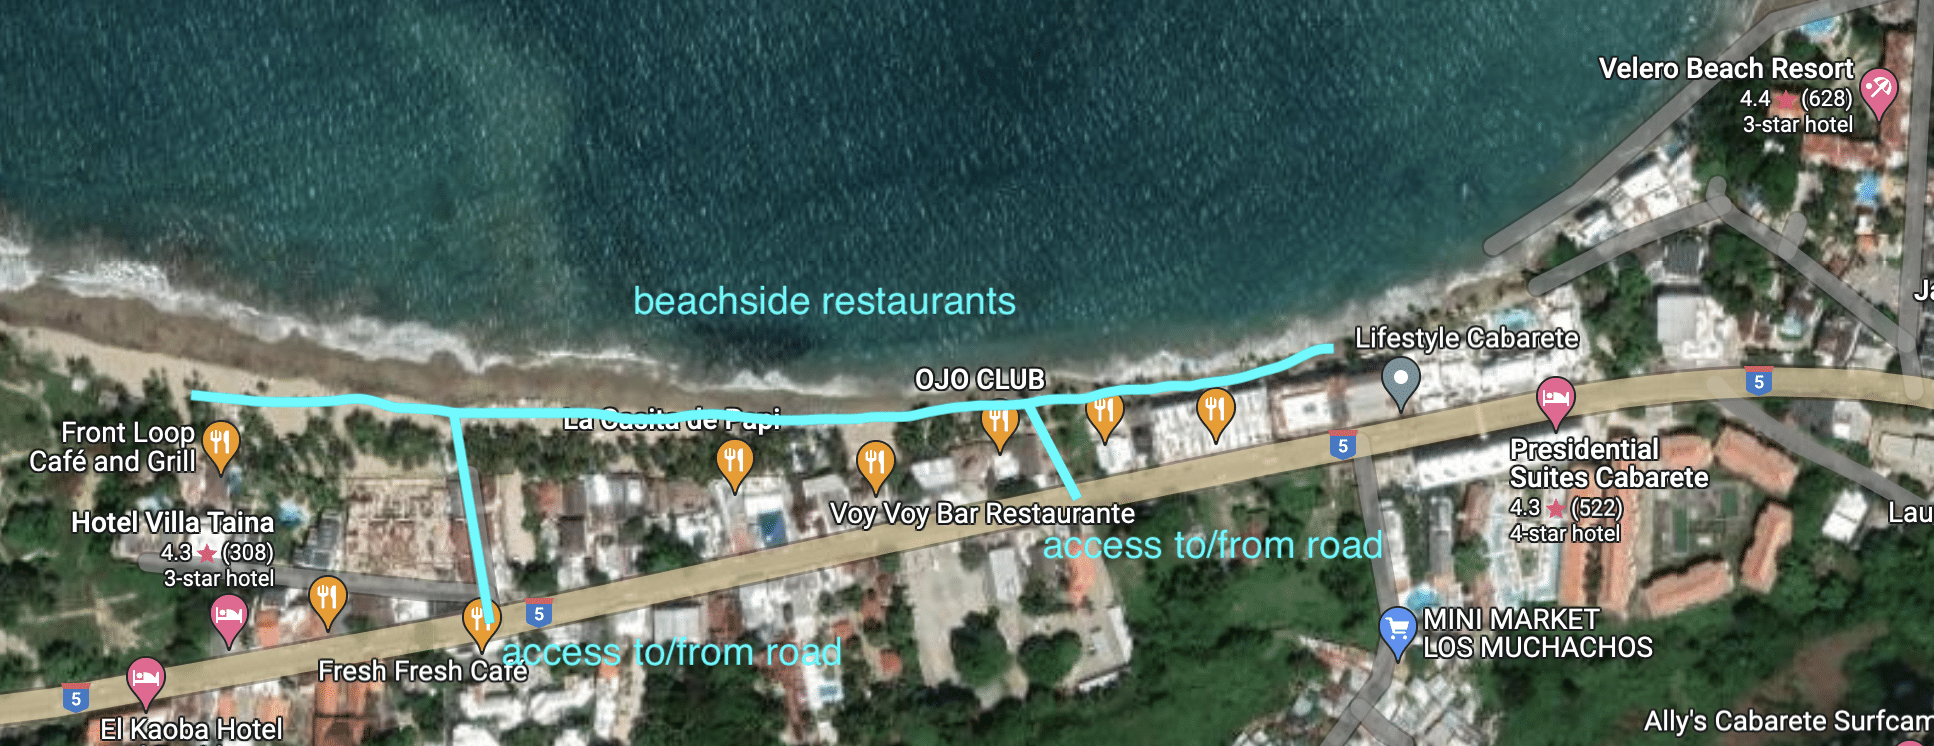 cabarete beach access directions